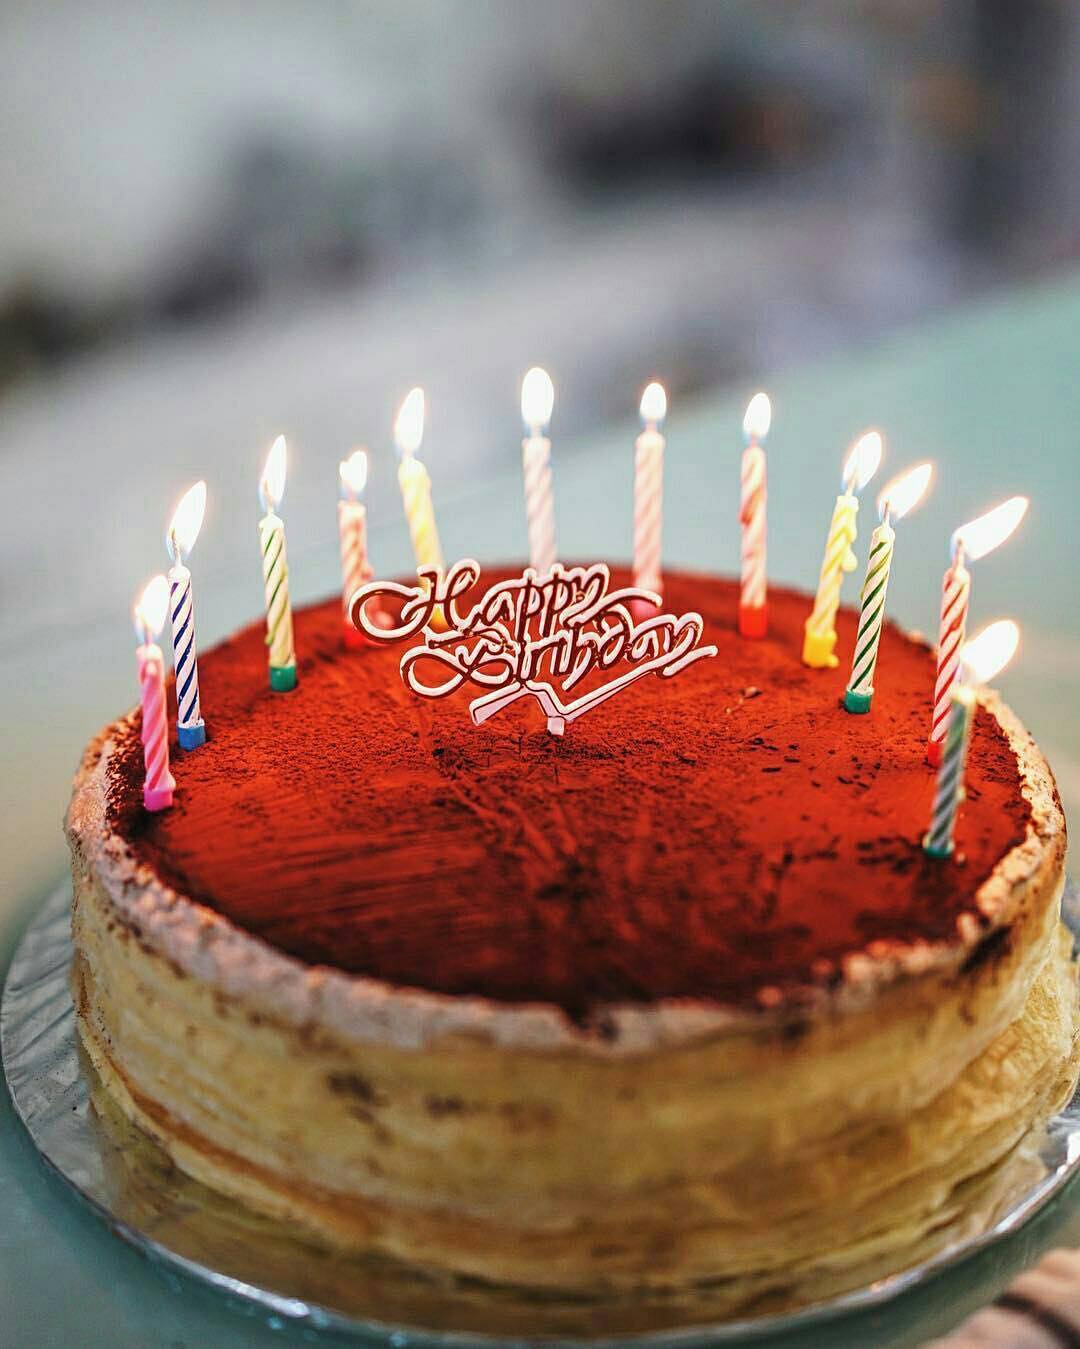 Gambar kue ulang tahun unik dan kreatif